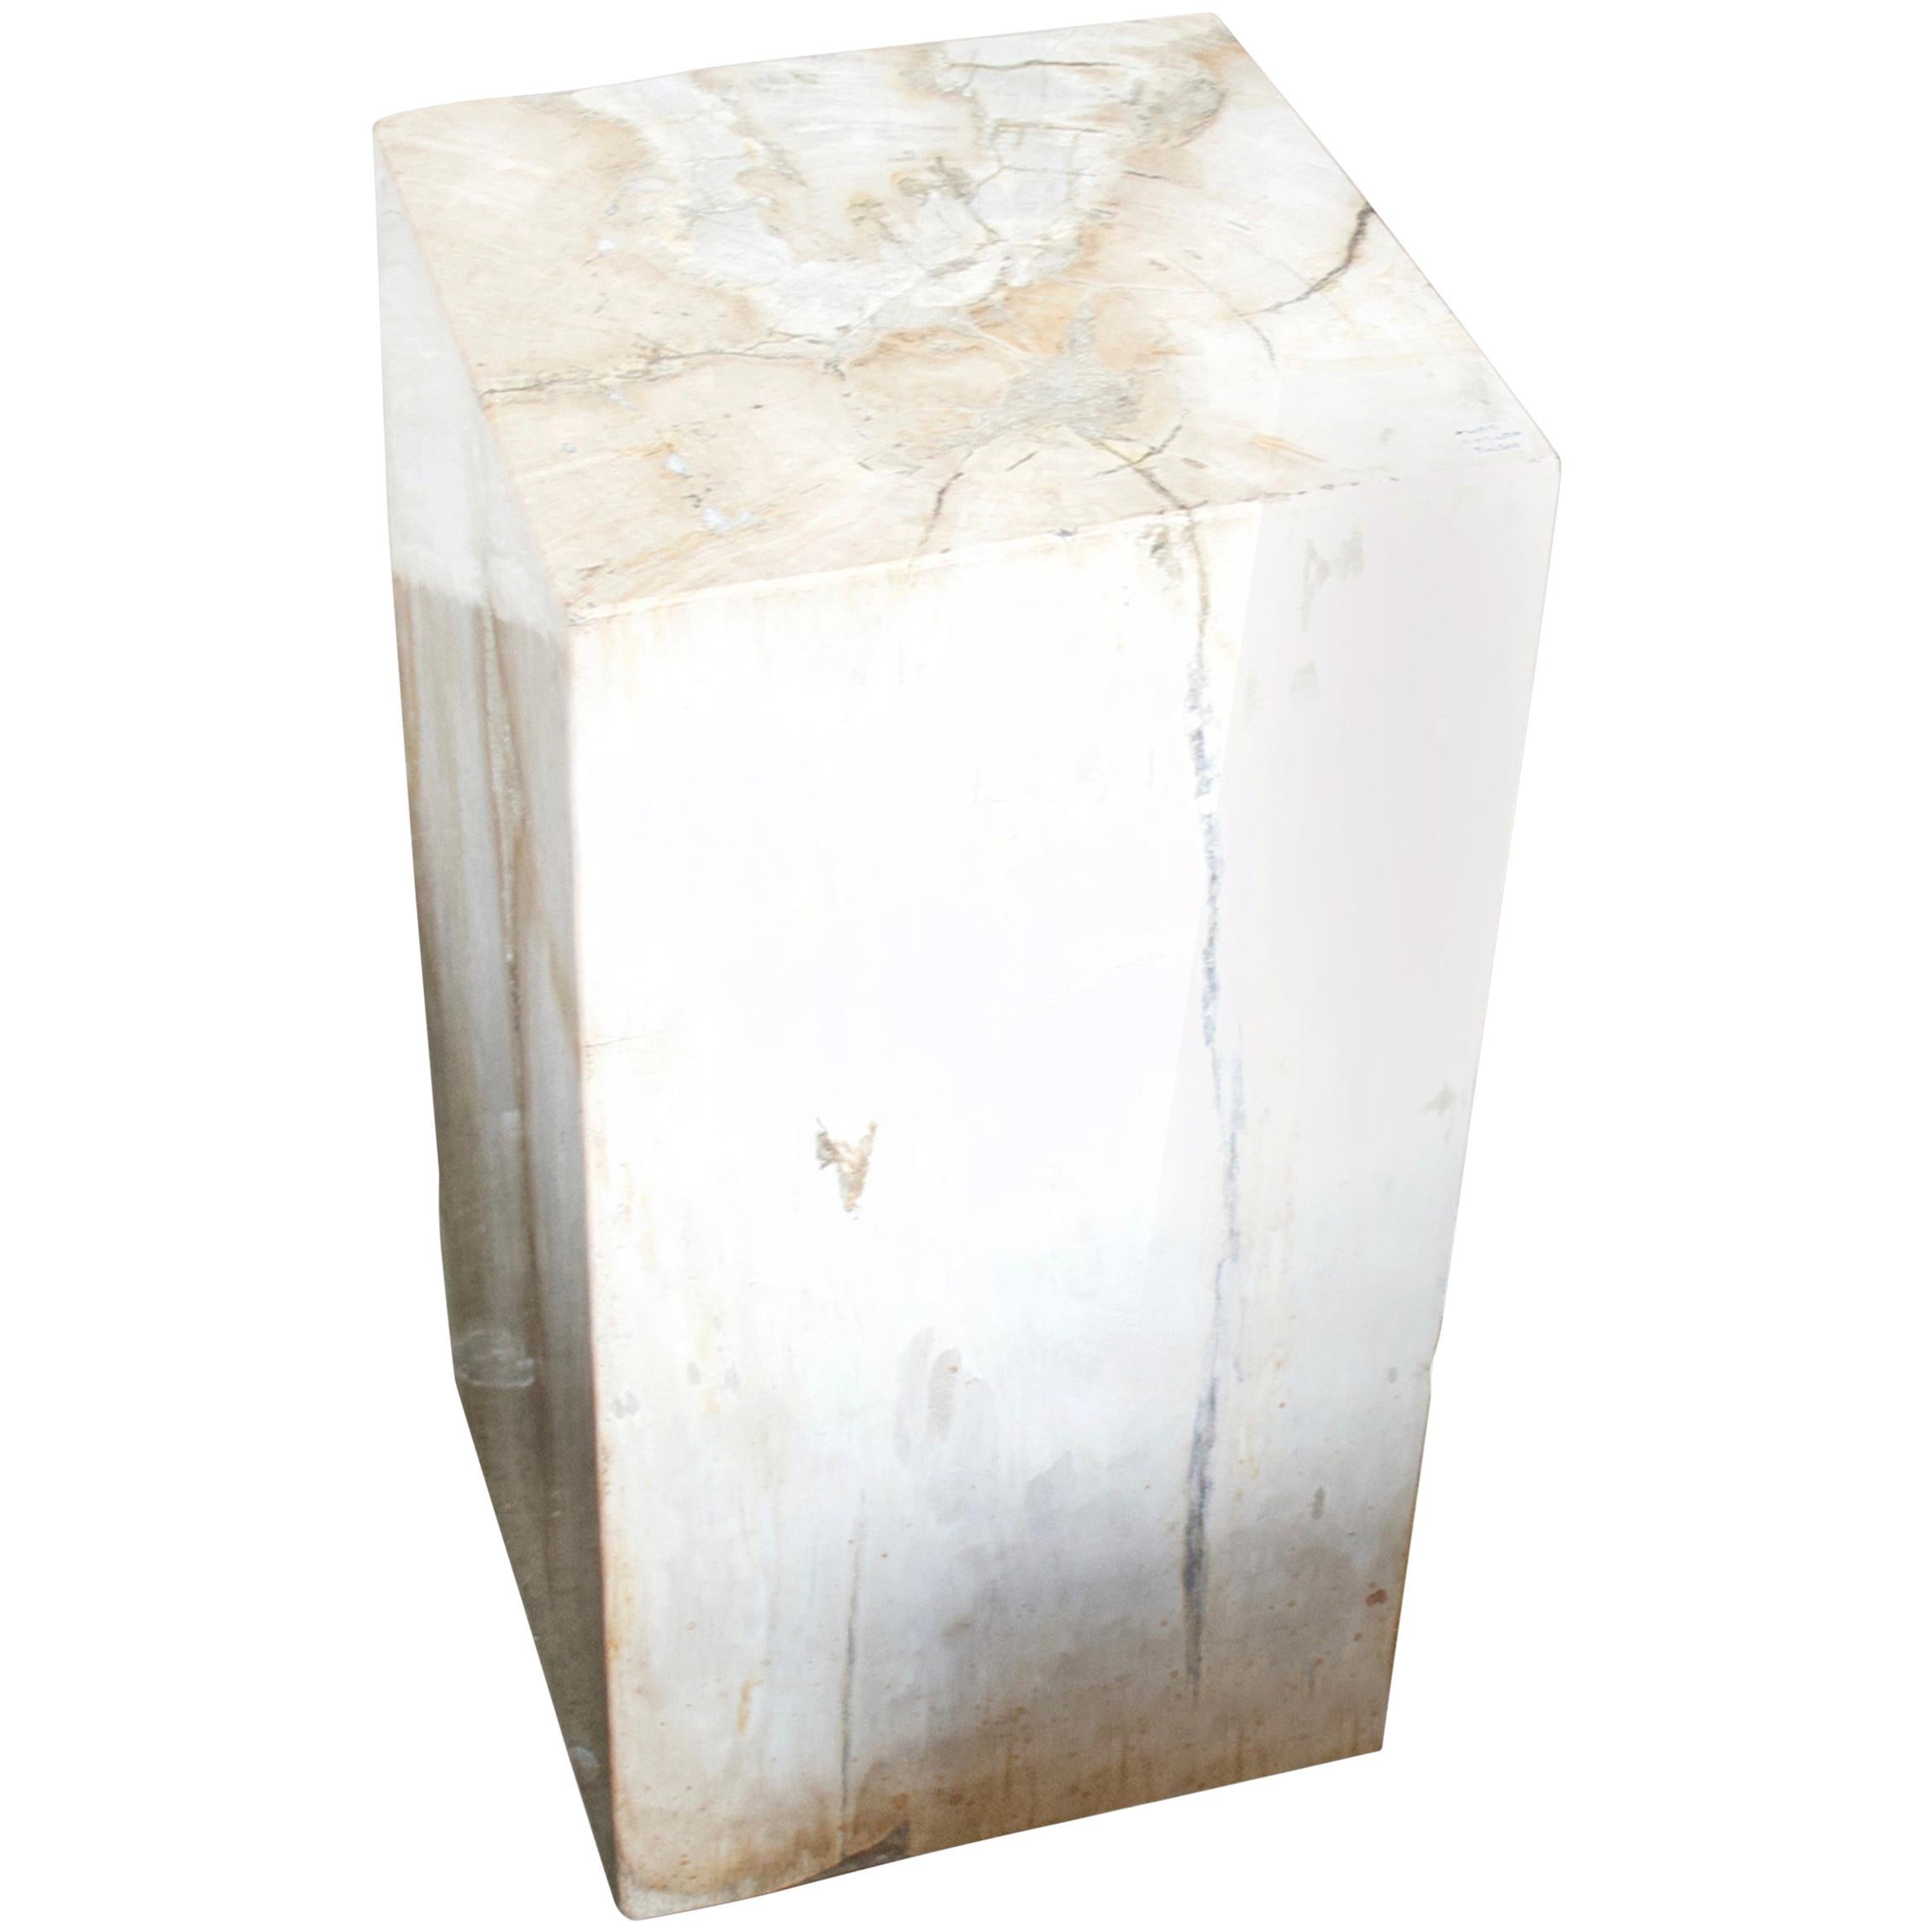 Andrianna Shamaris Petrified Wood Side Table or Pedestal